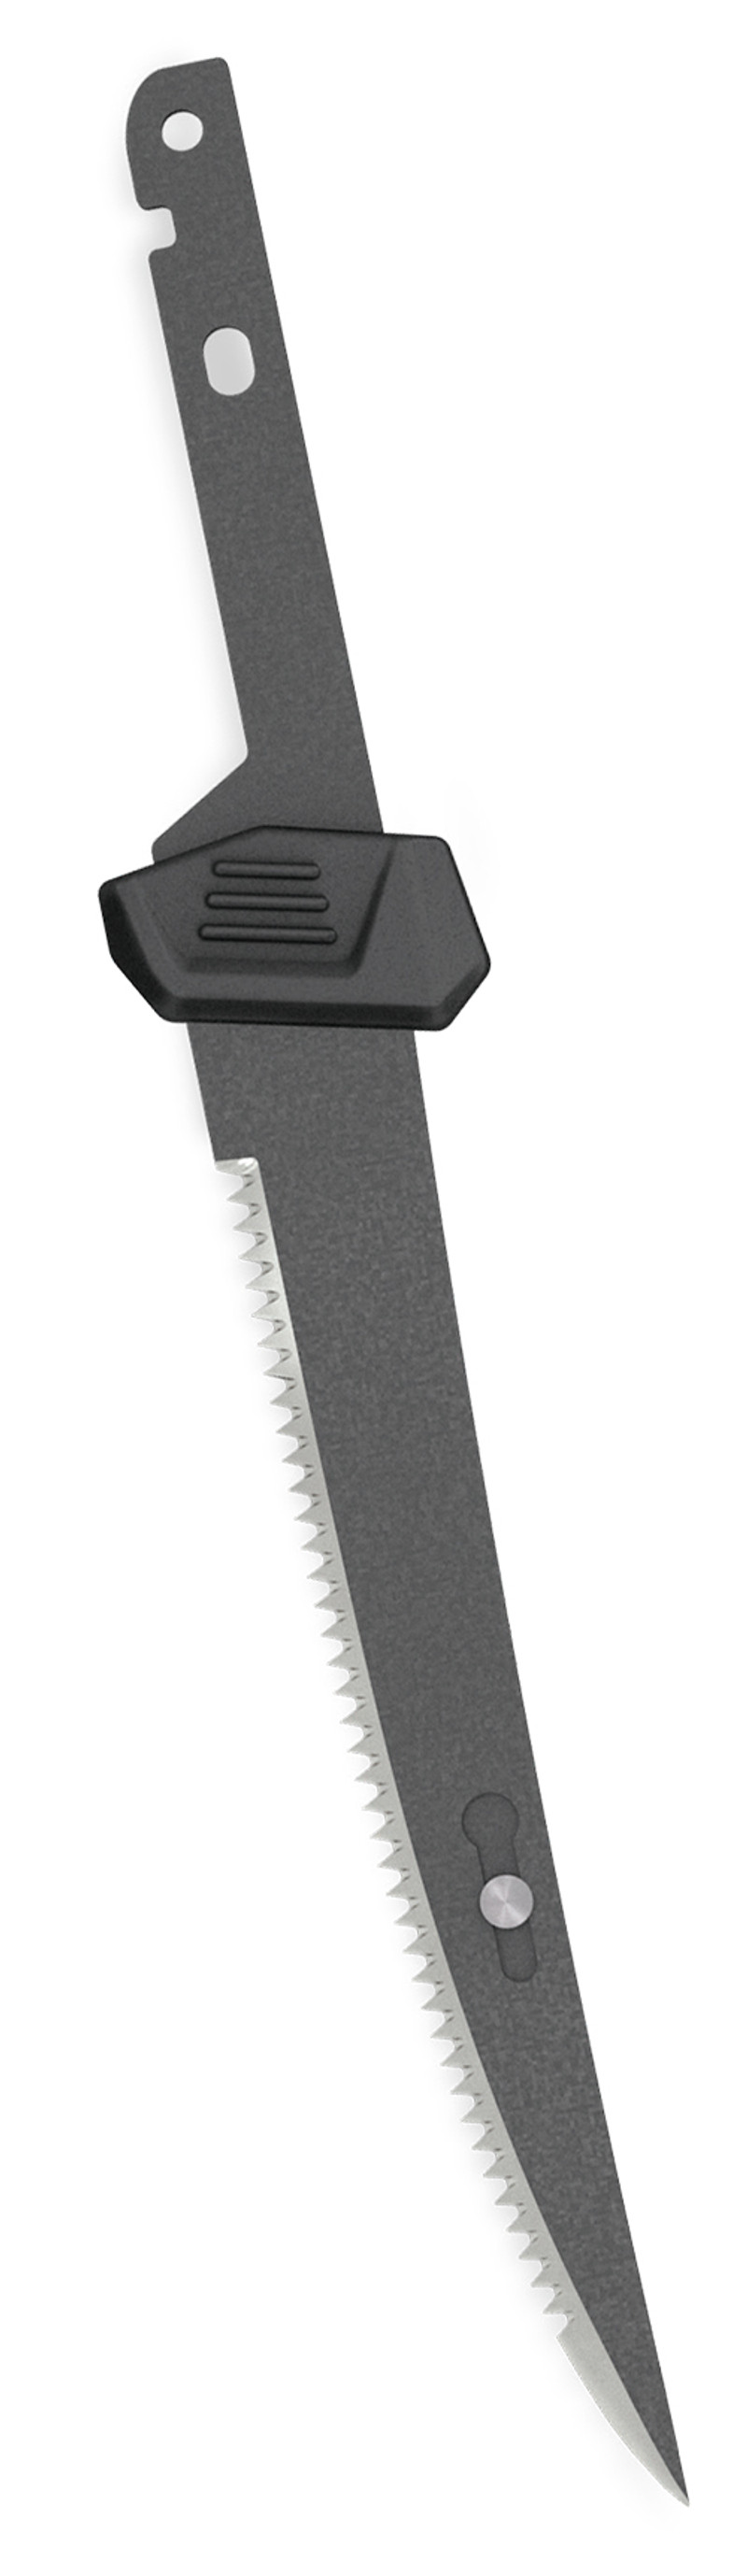 Rapala Electric Fillet Knife Set - Gray/Black 